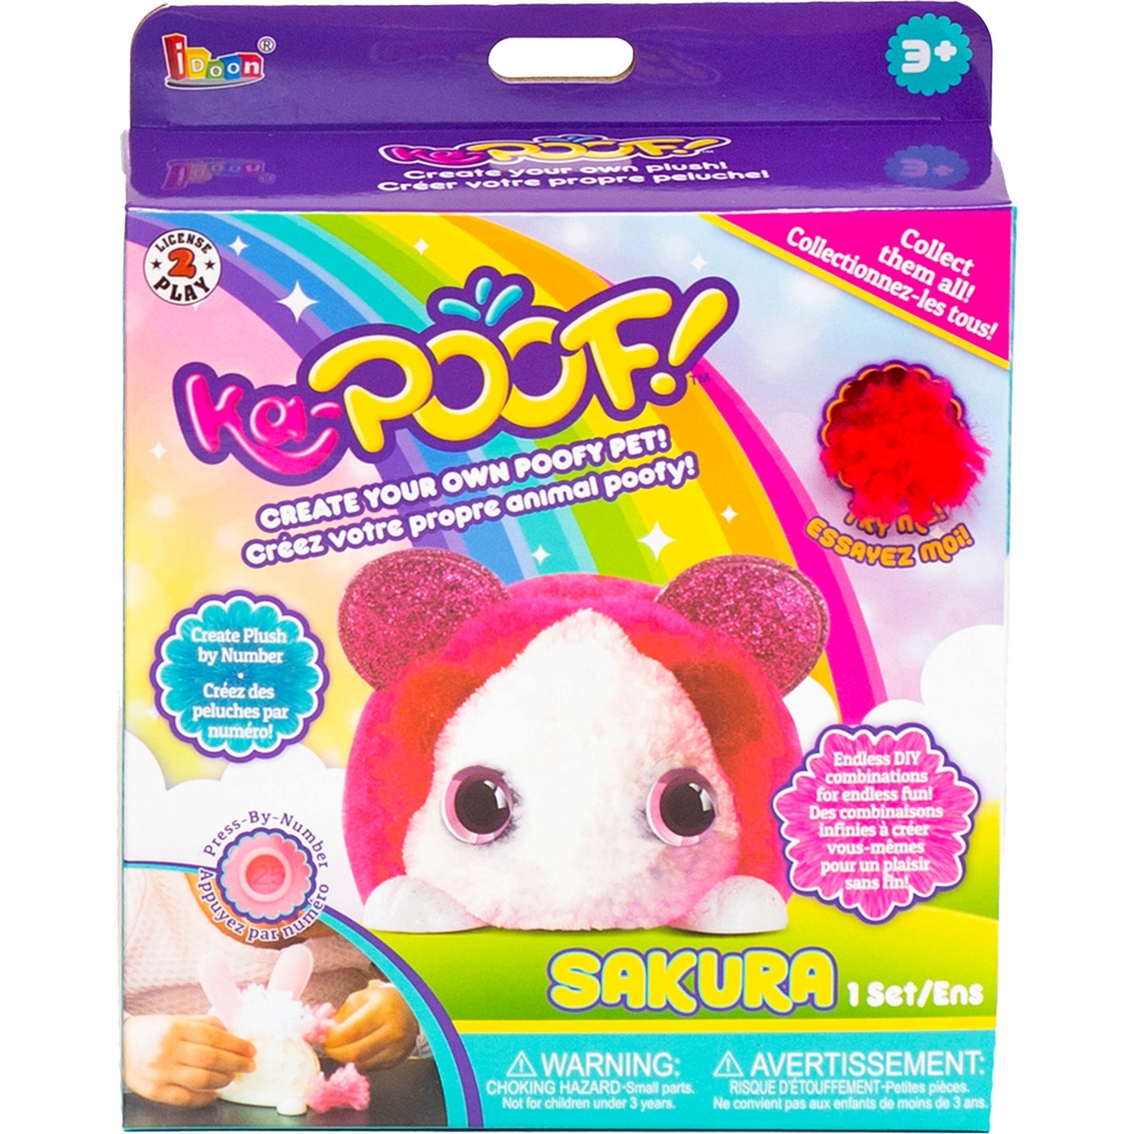 License 2 Play KaPoof Pets Sakura Bear Cub - Image 1 of 7